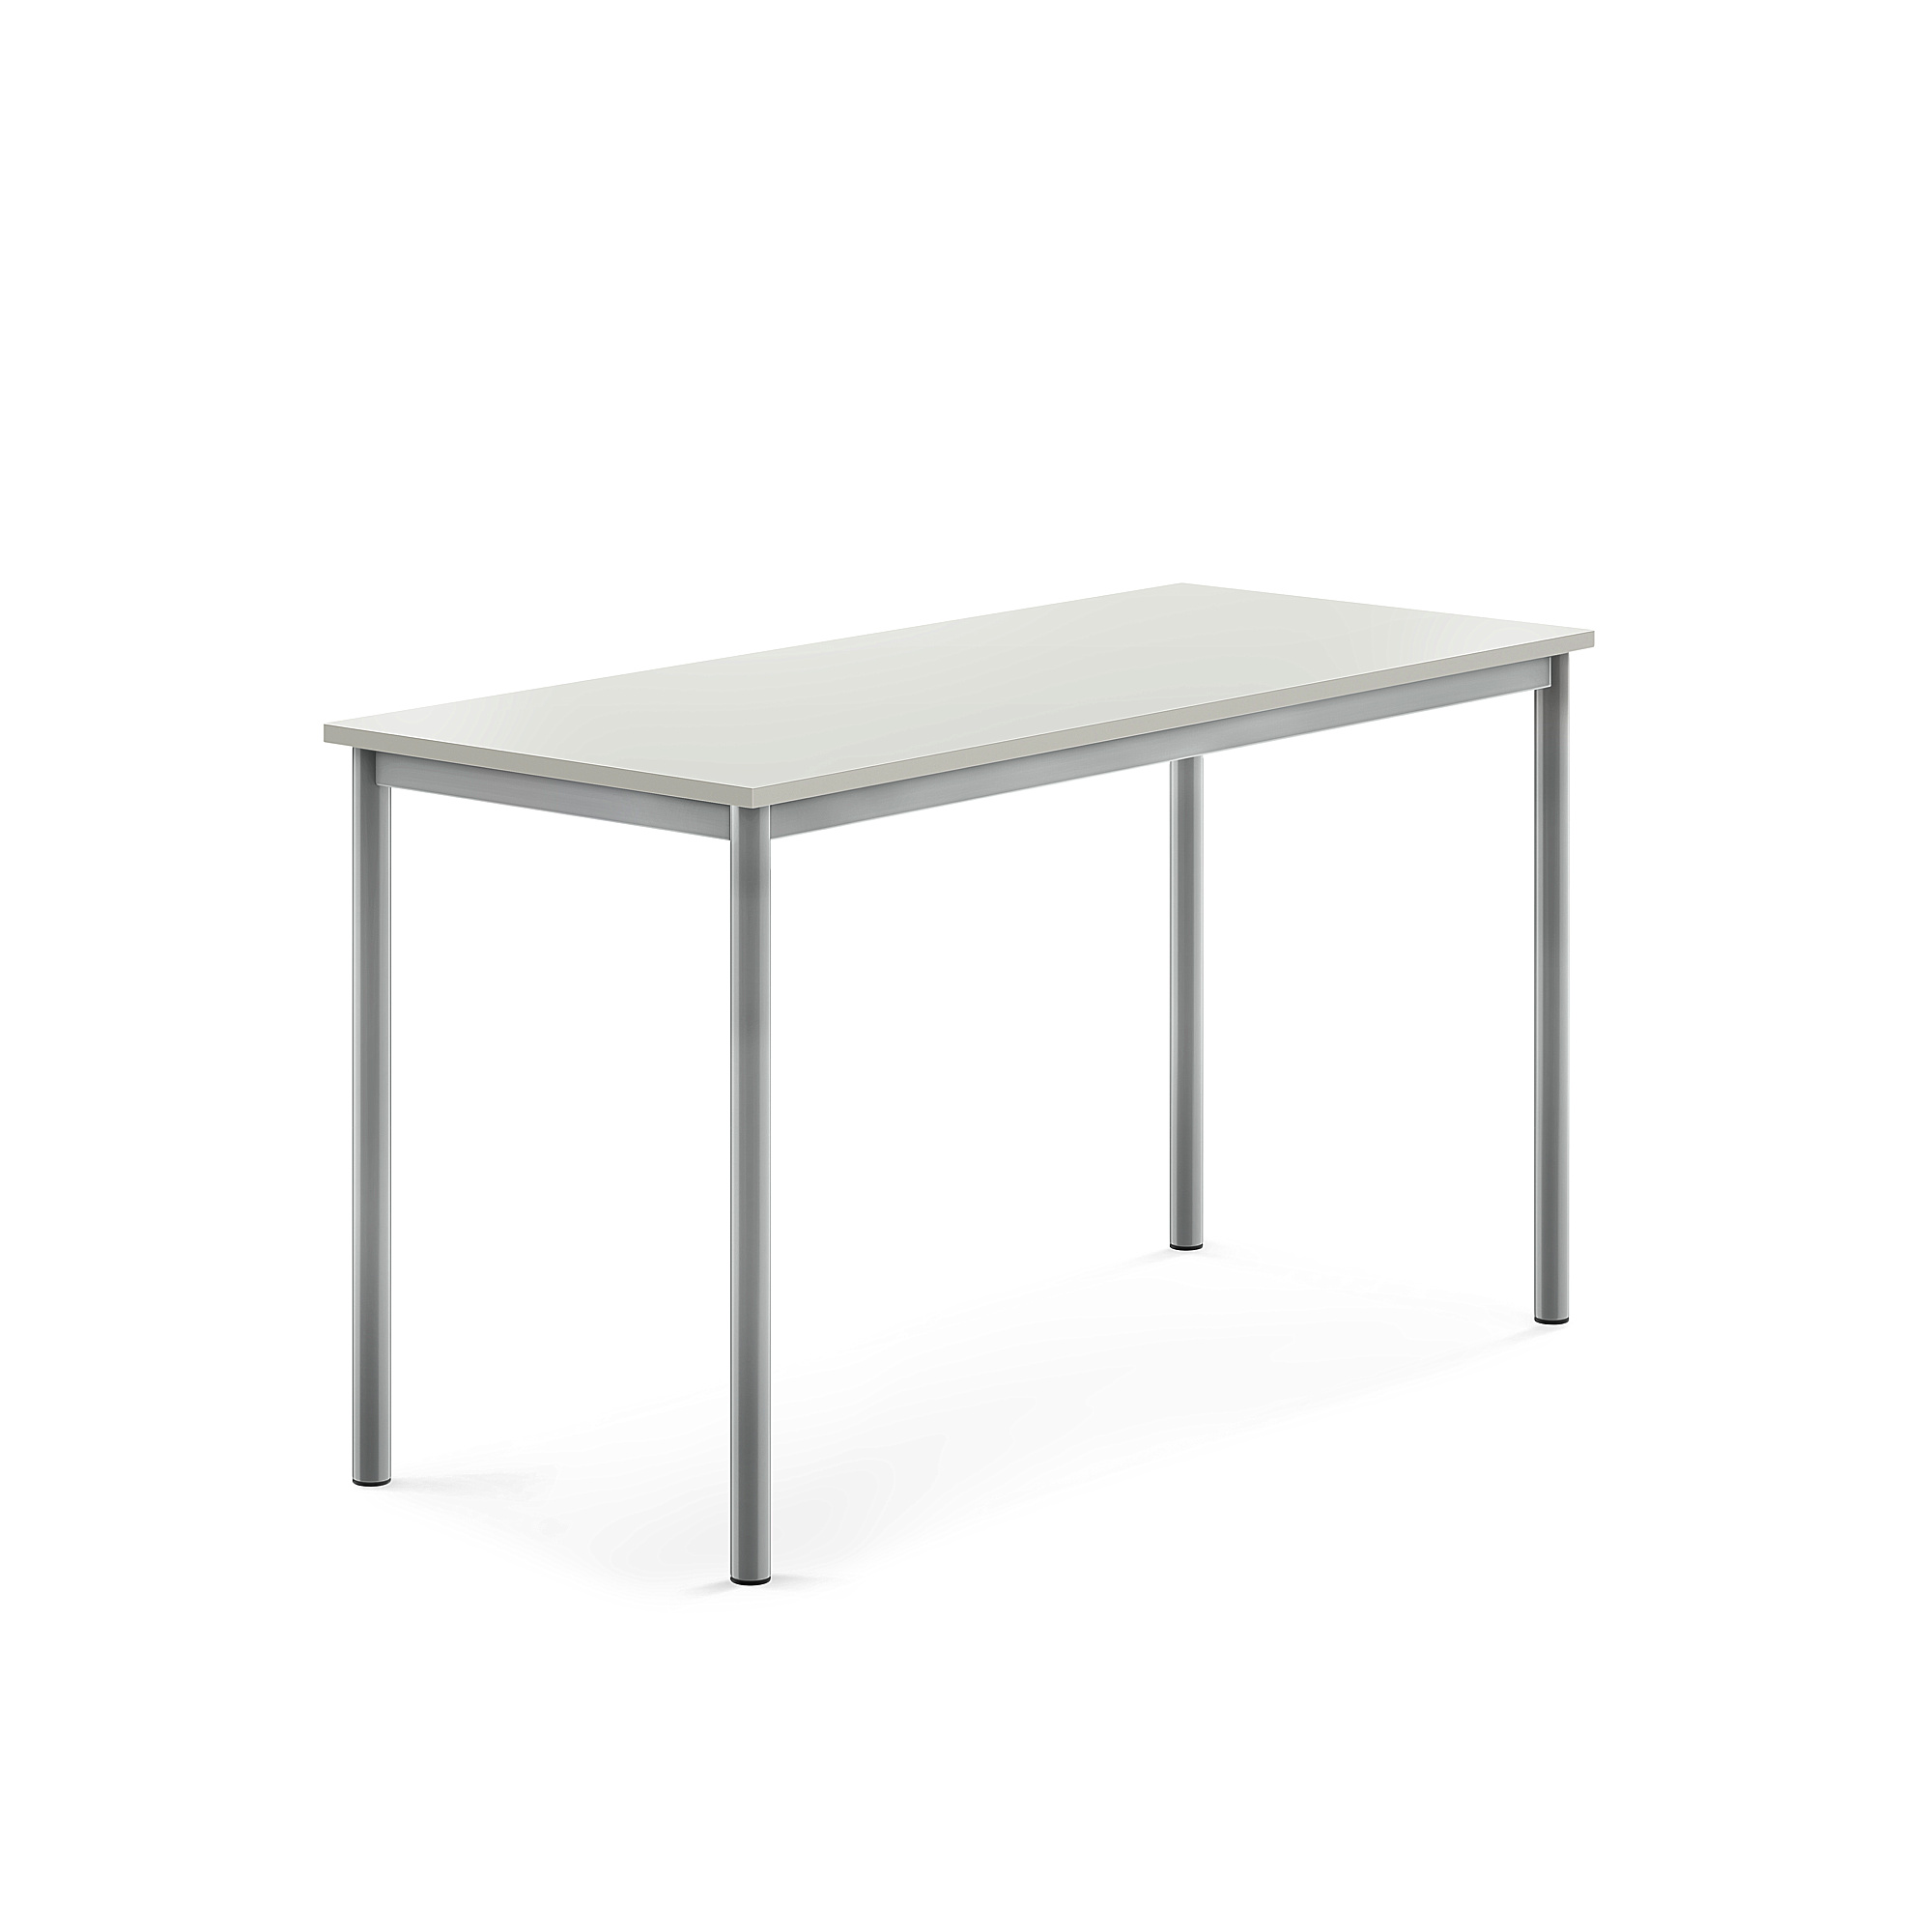 Stůl SONITUS, 1400x600x760 mm, stříbrné nohy, HPL deska tlumící hluk, šedá